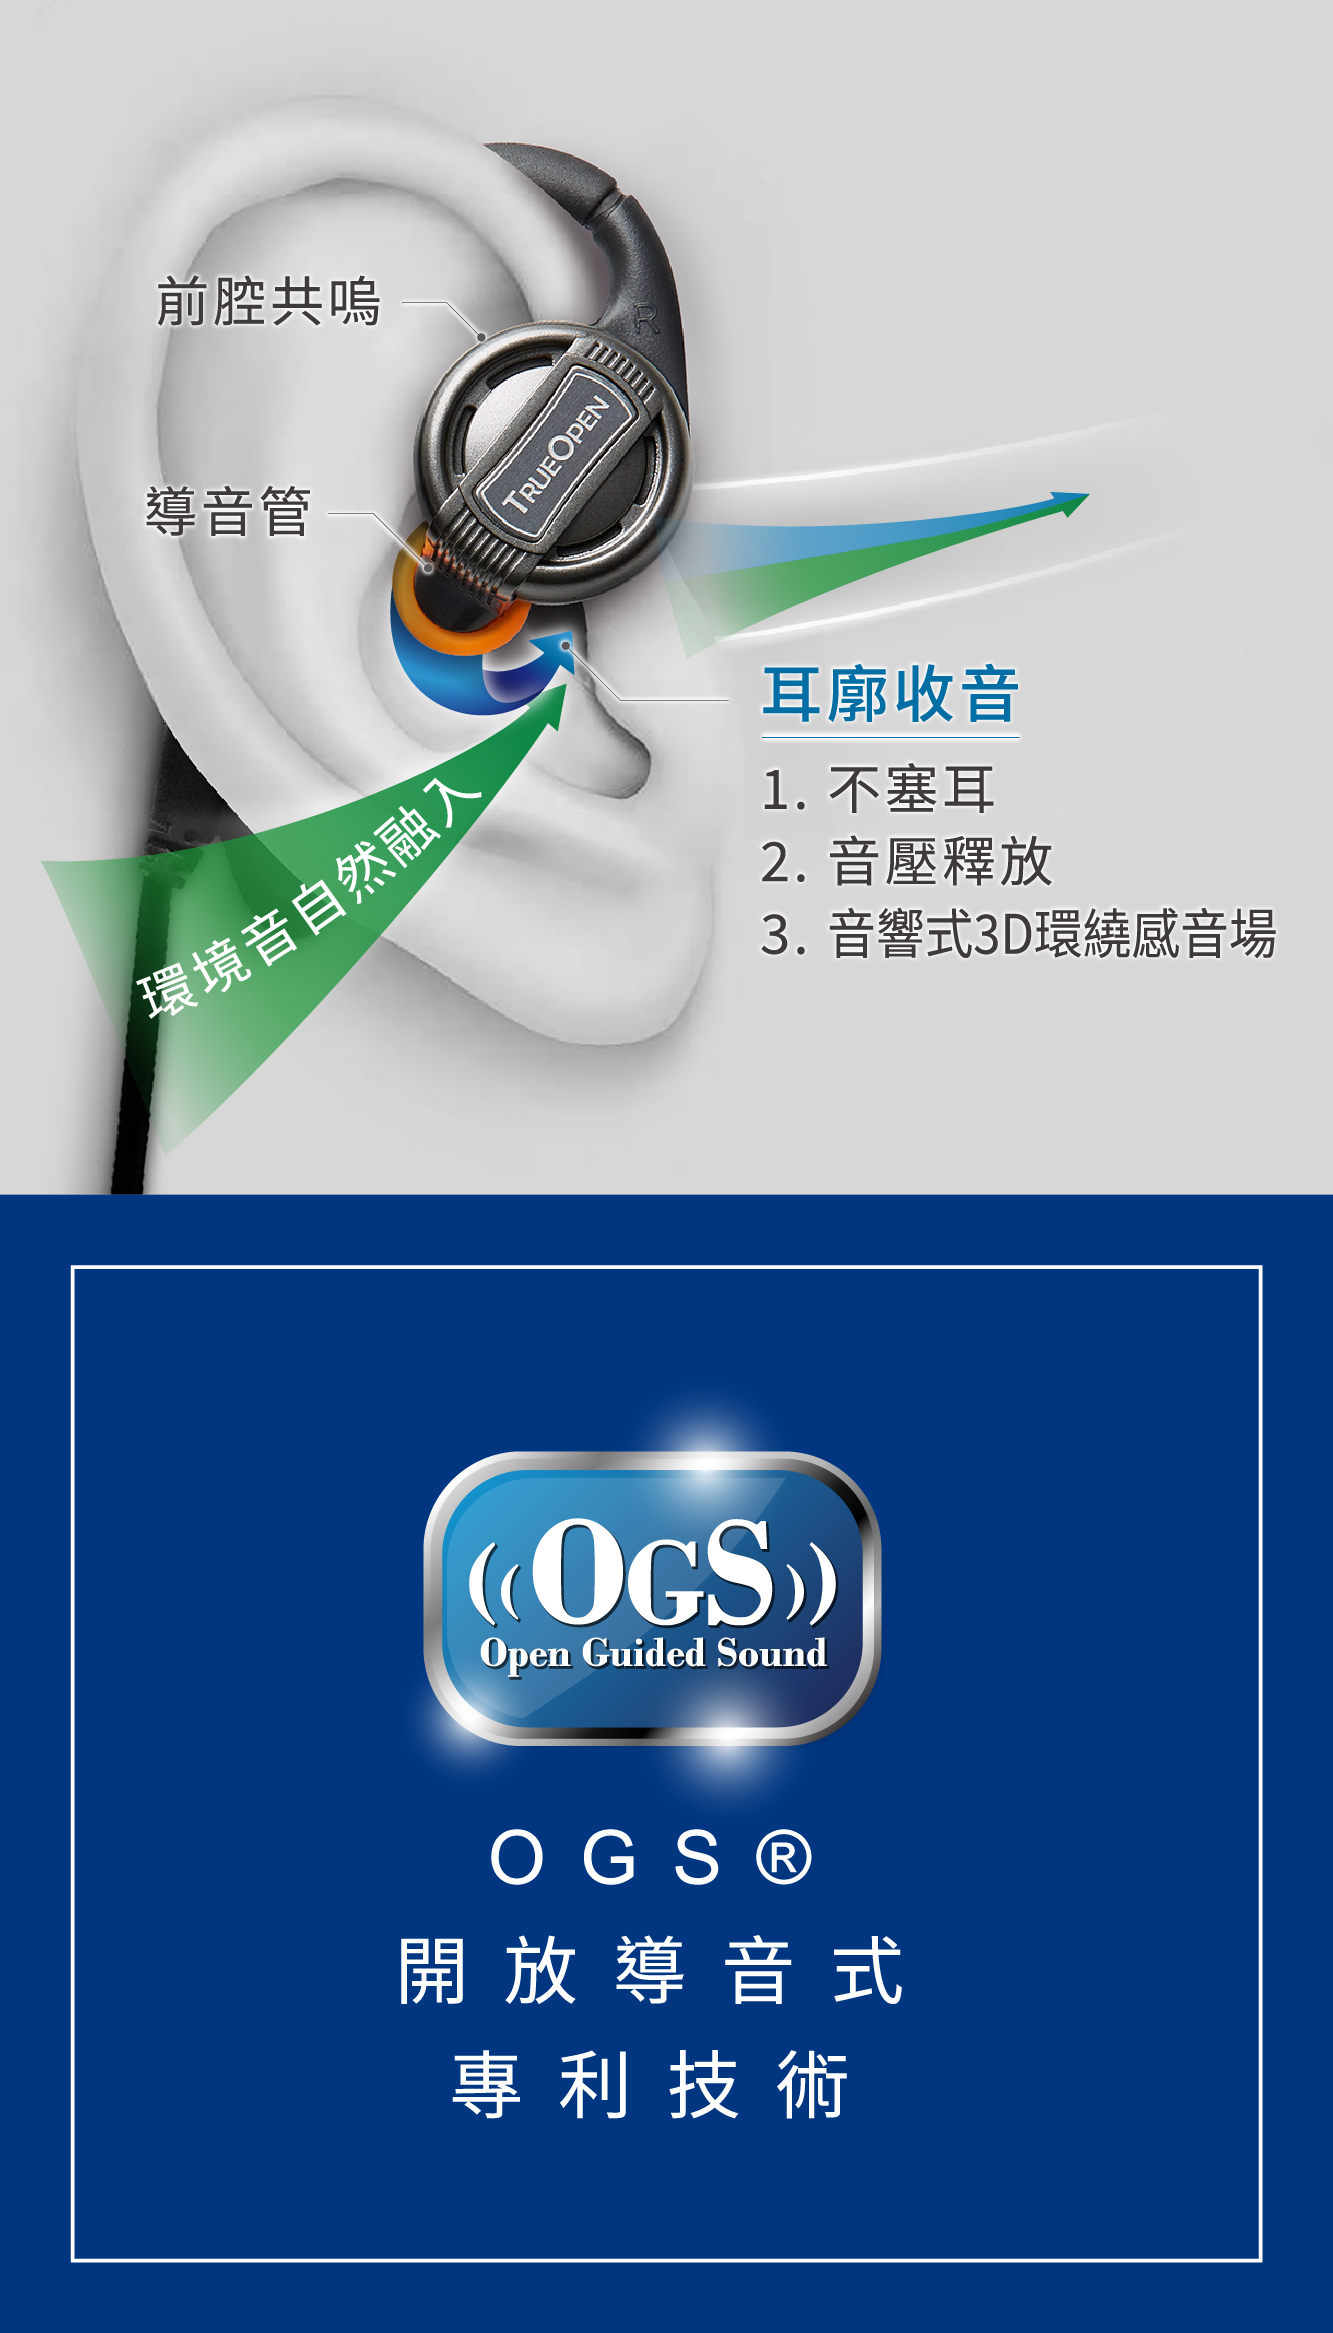 OGS開放式耳機,利用前腔共鳴+導音管將環境音自然融合於耳際，再由耳廓收音進入自然聽覺系統